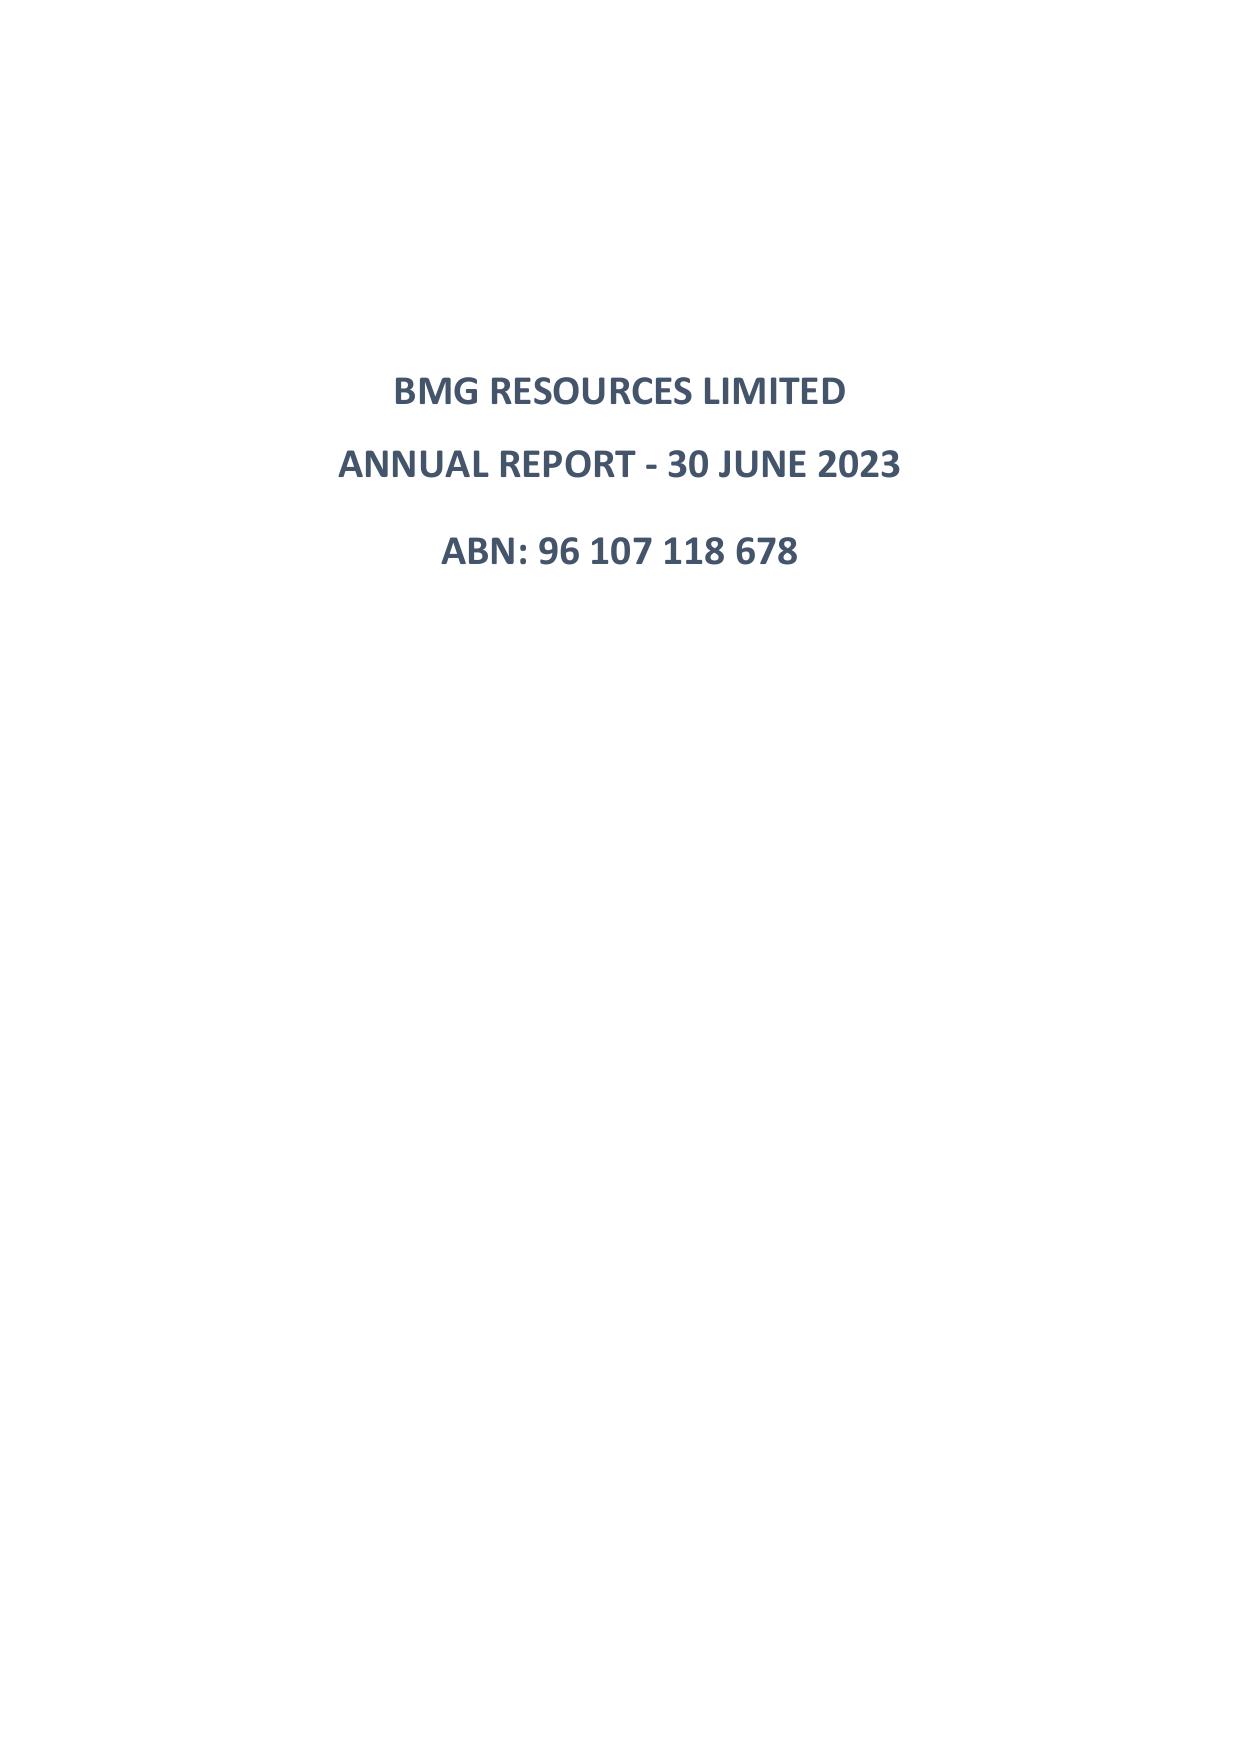 ARGENTMINERALS 2023 Annual Report